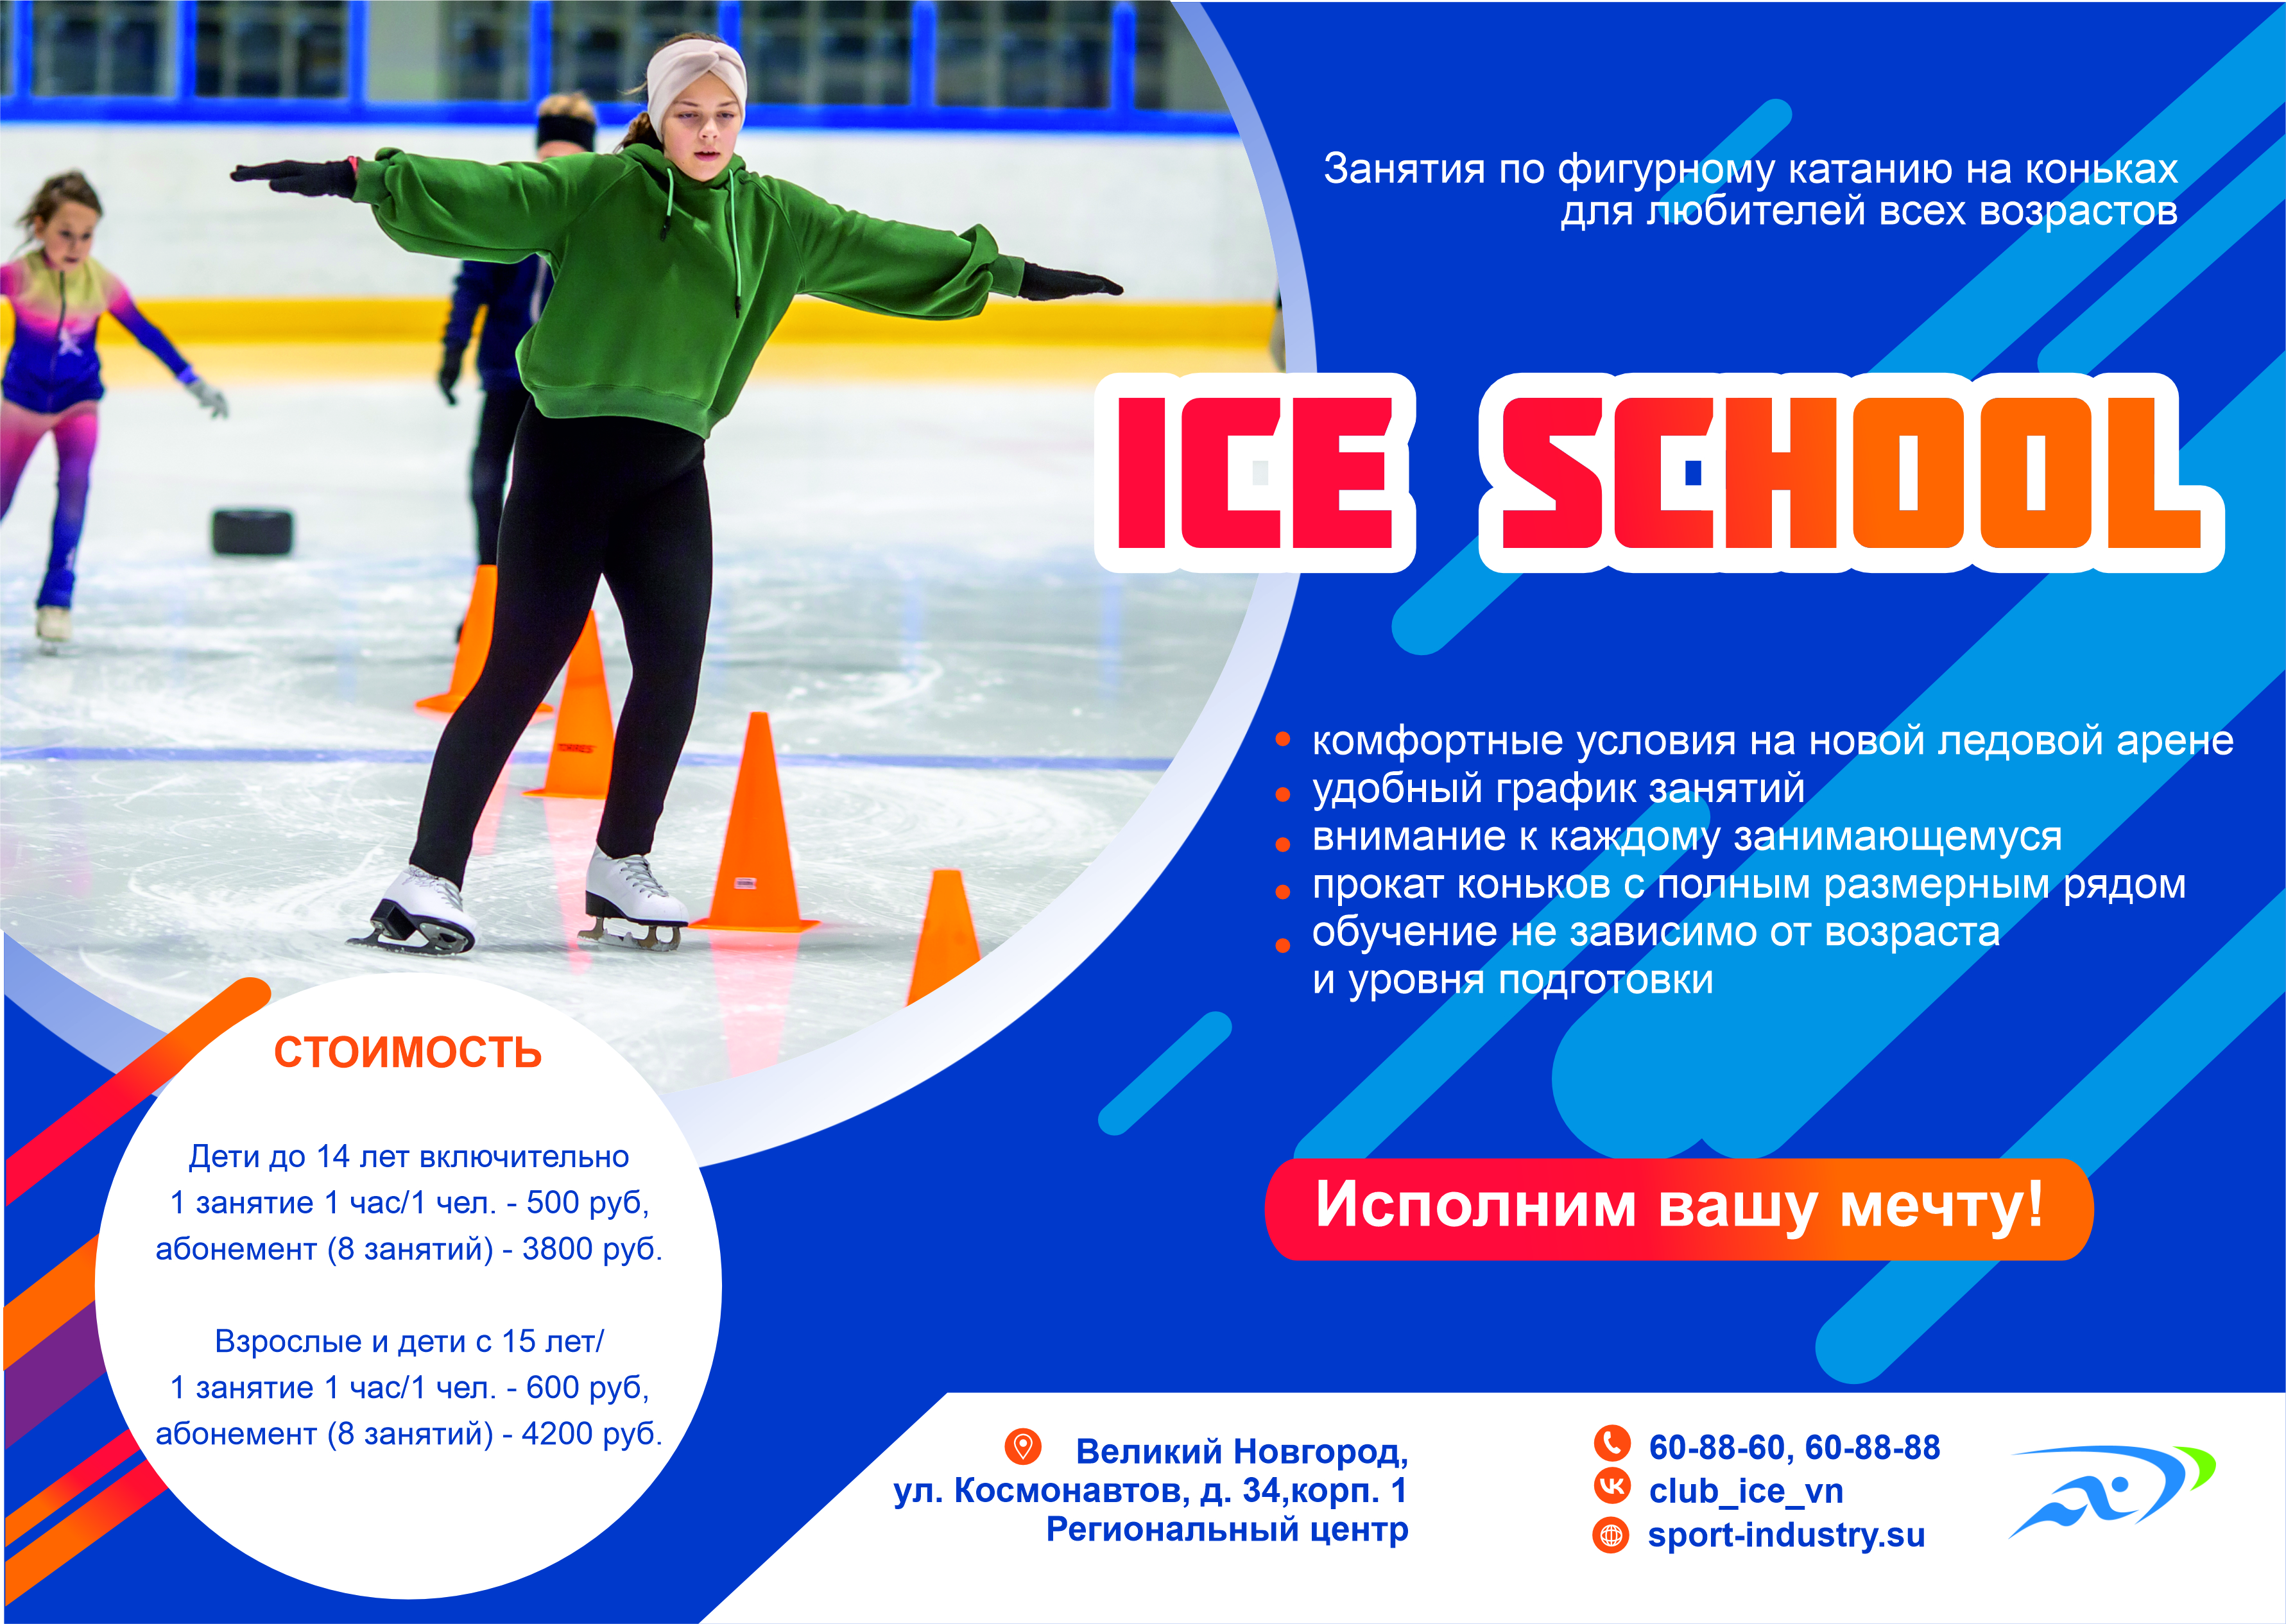 Айс скул. Ice скул. Start Skating. Ice School Double Mint. Айс школа